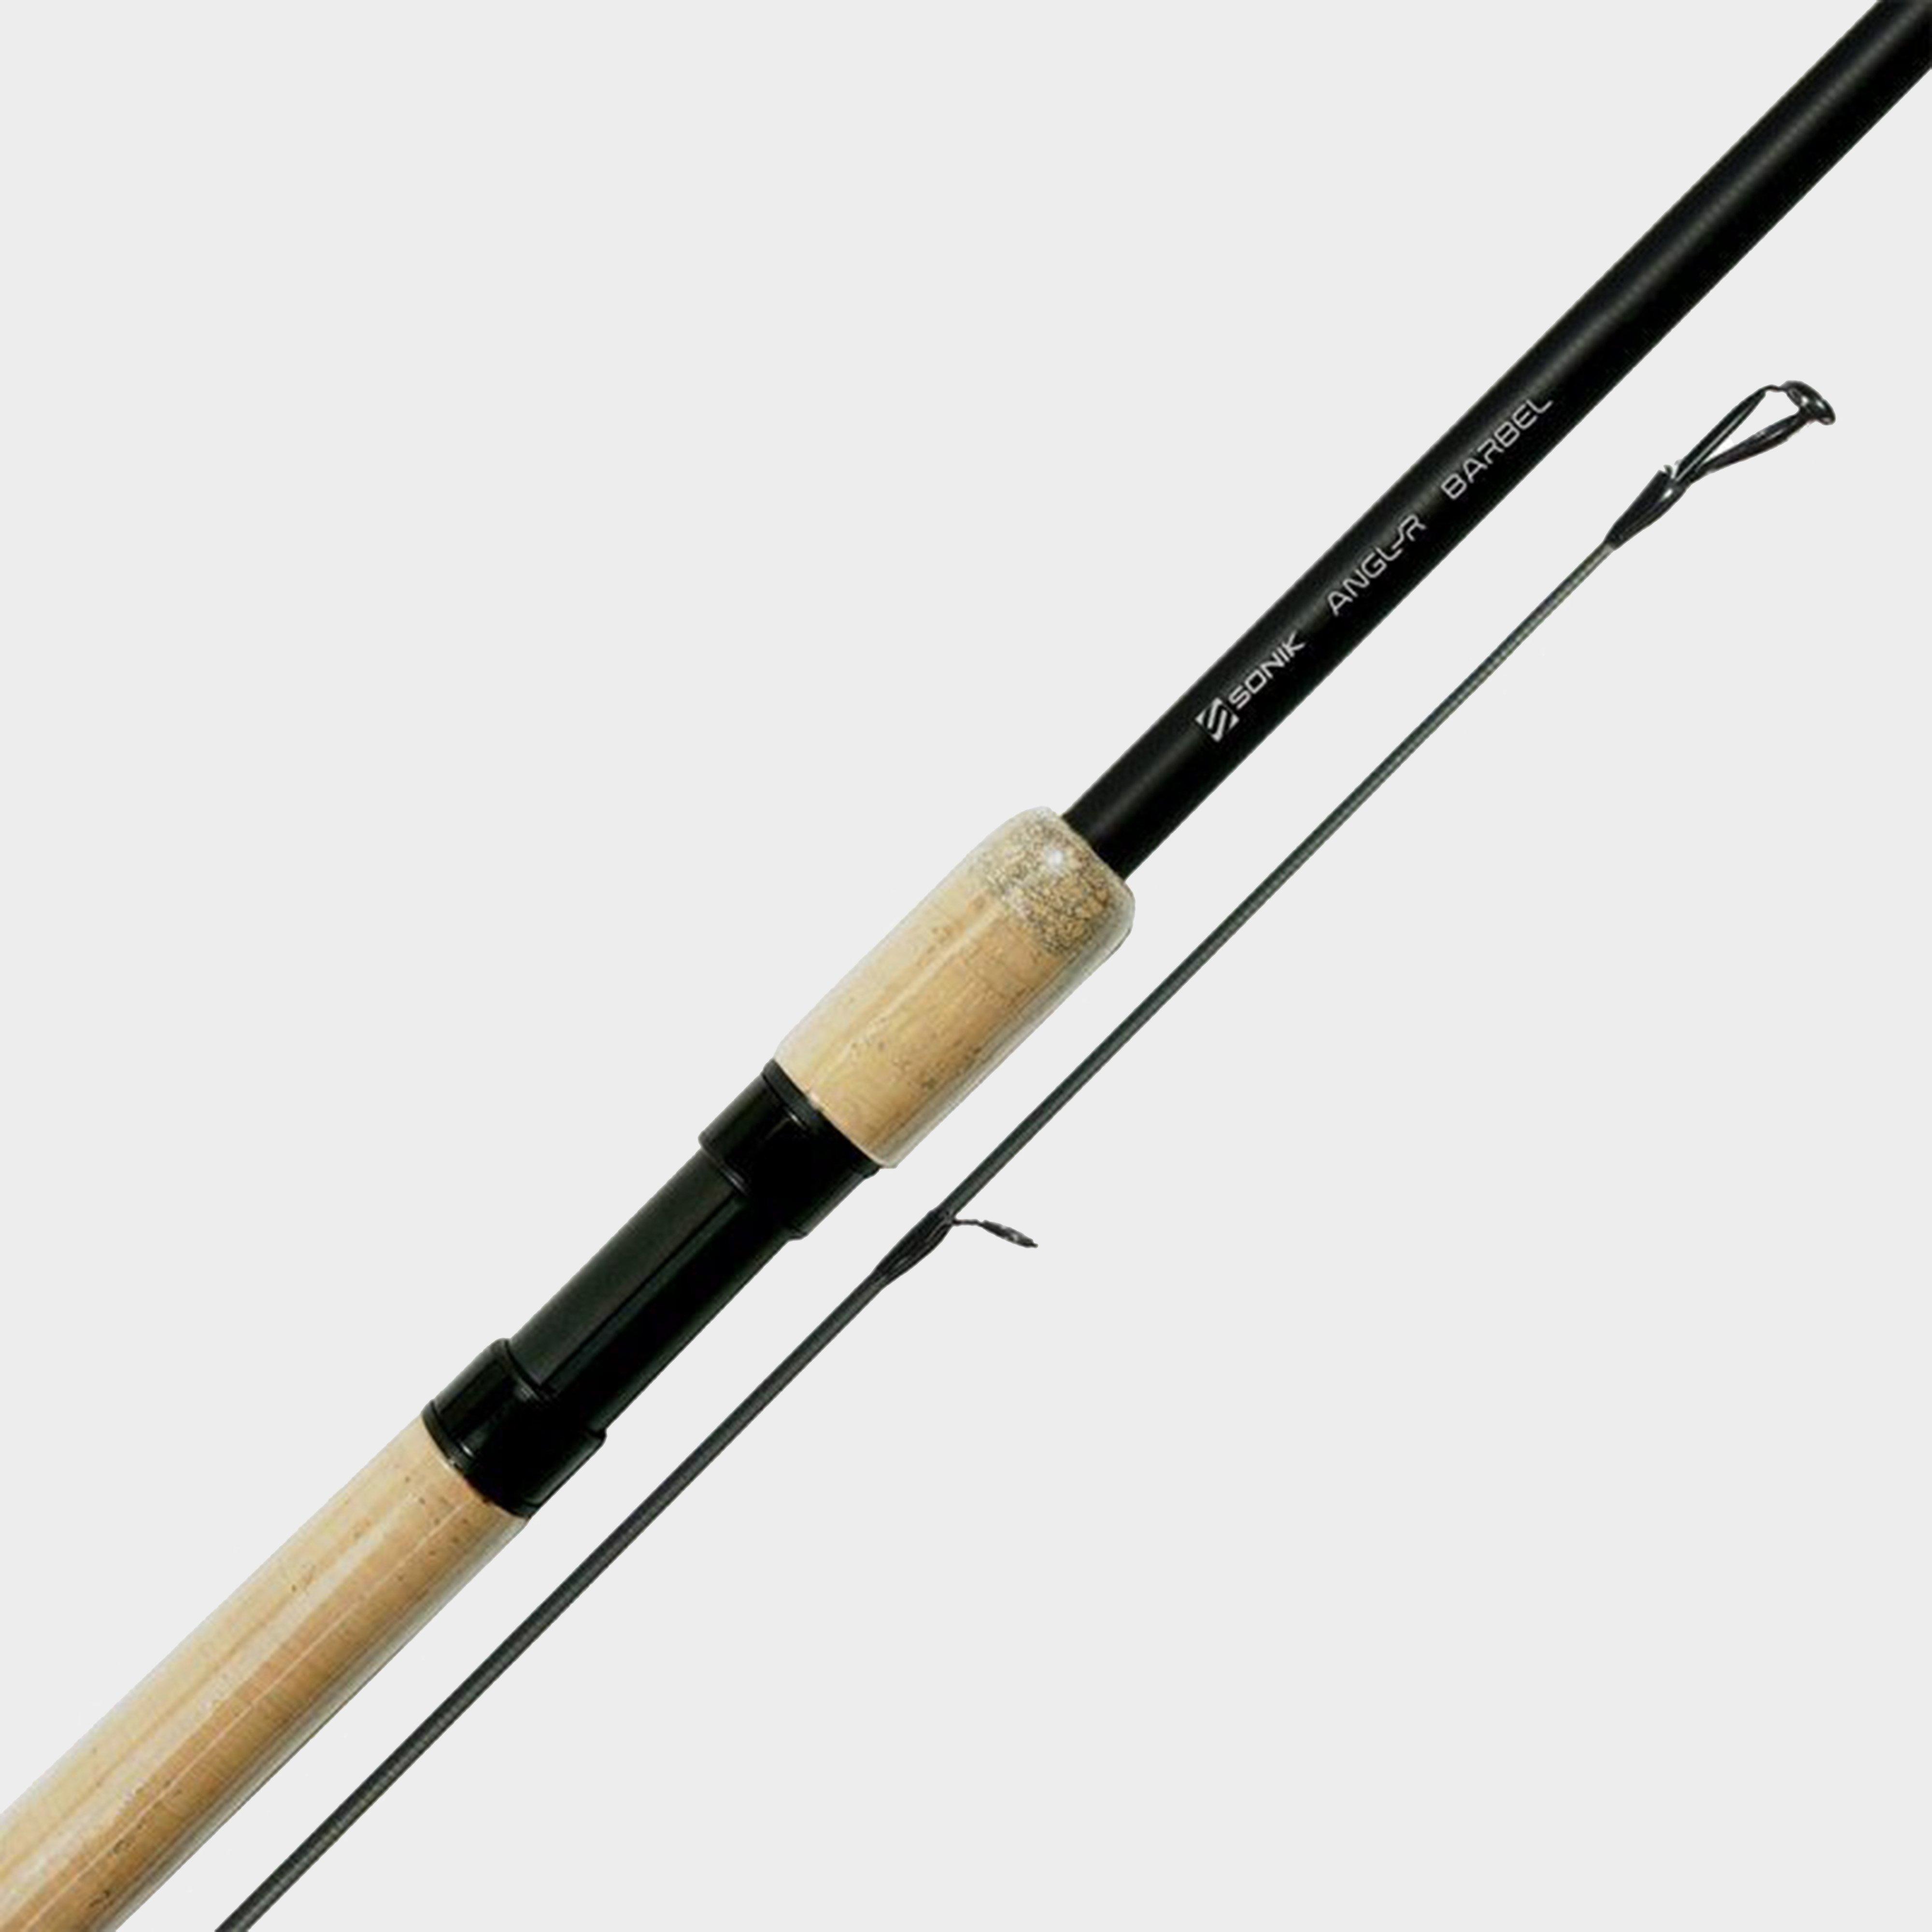  Sonik Angl-R Twin Top Fishing Rod 12ft 2.5lb, Black